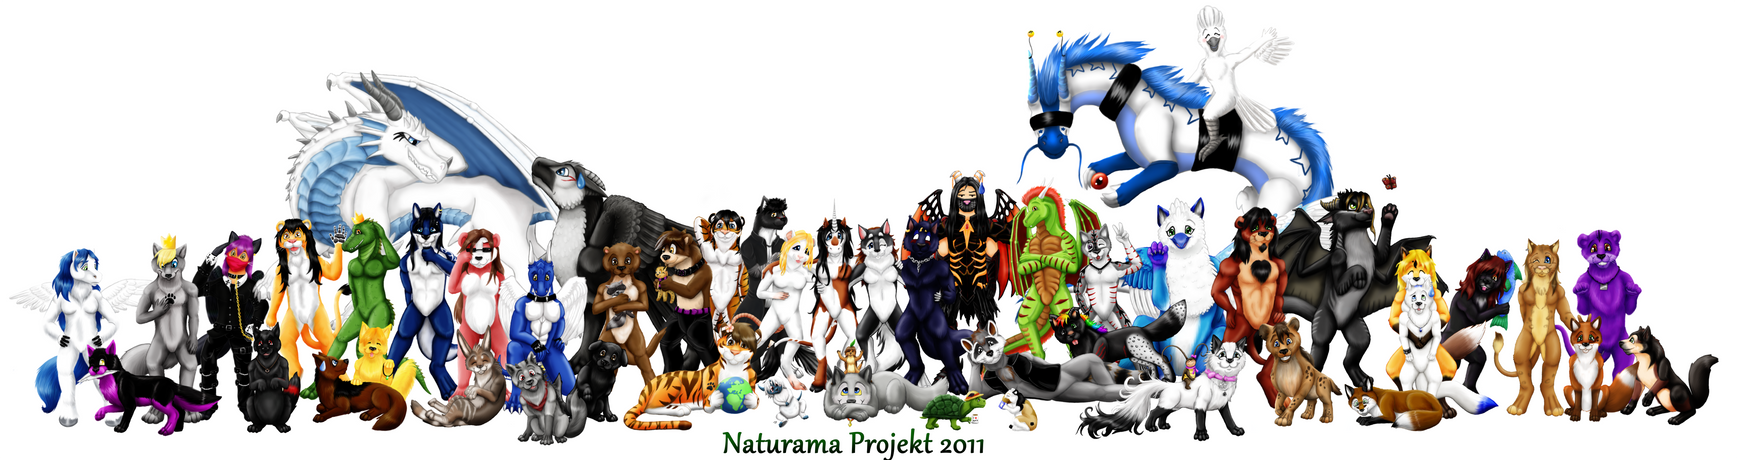 Naturama Group 2011